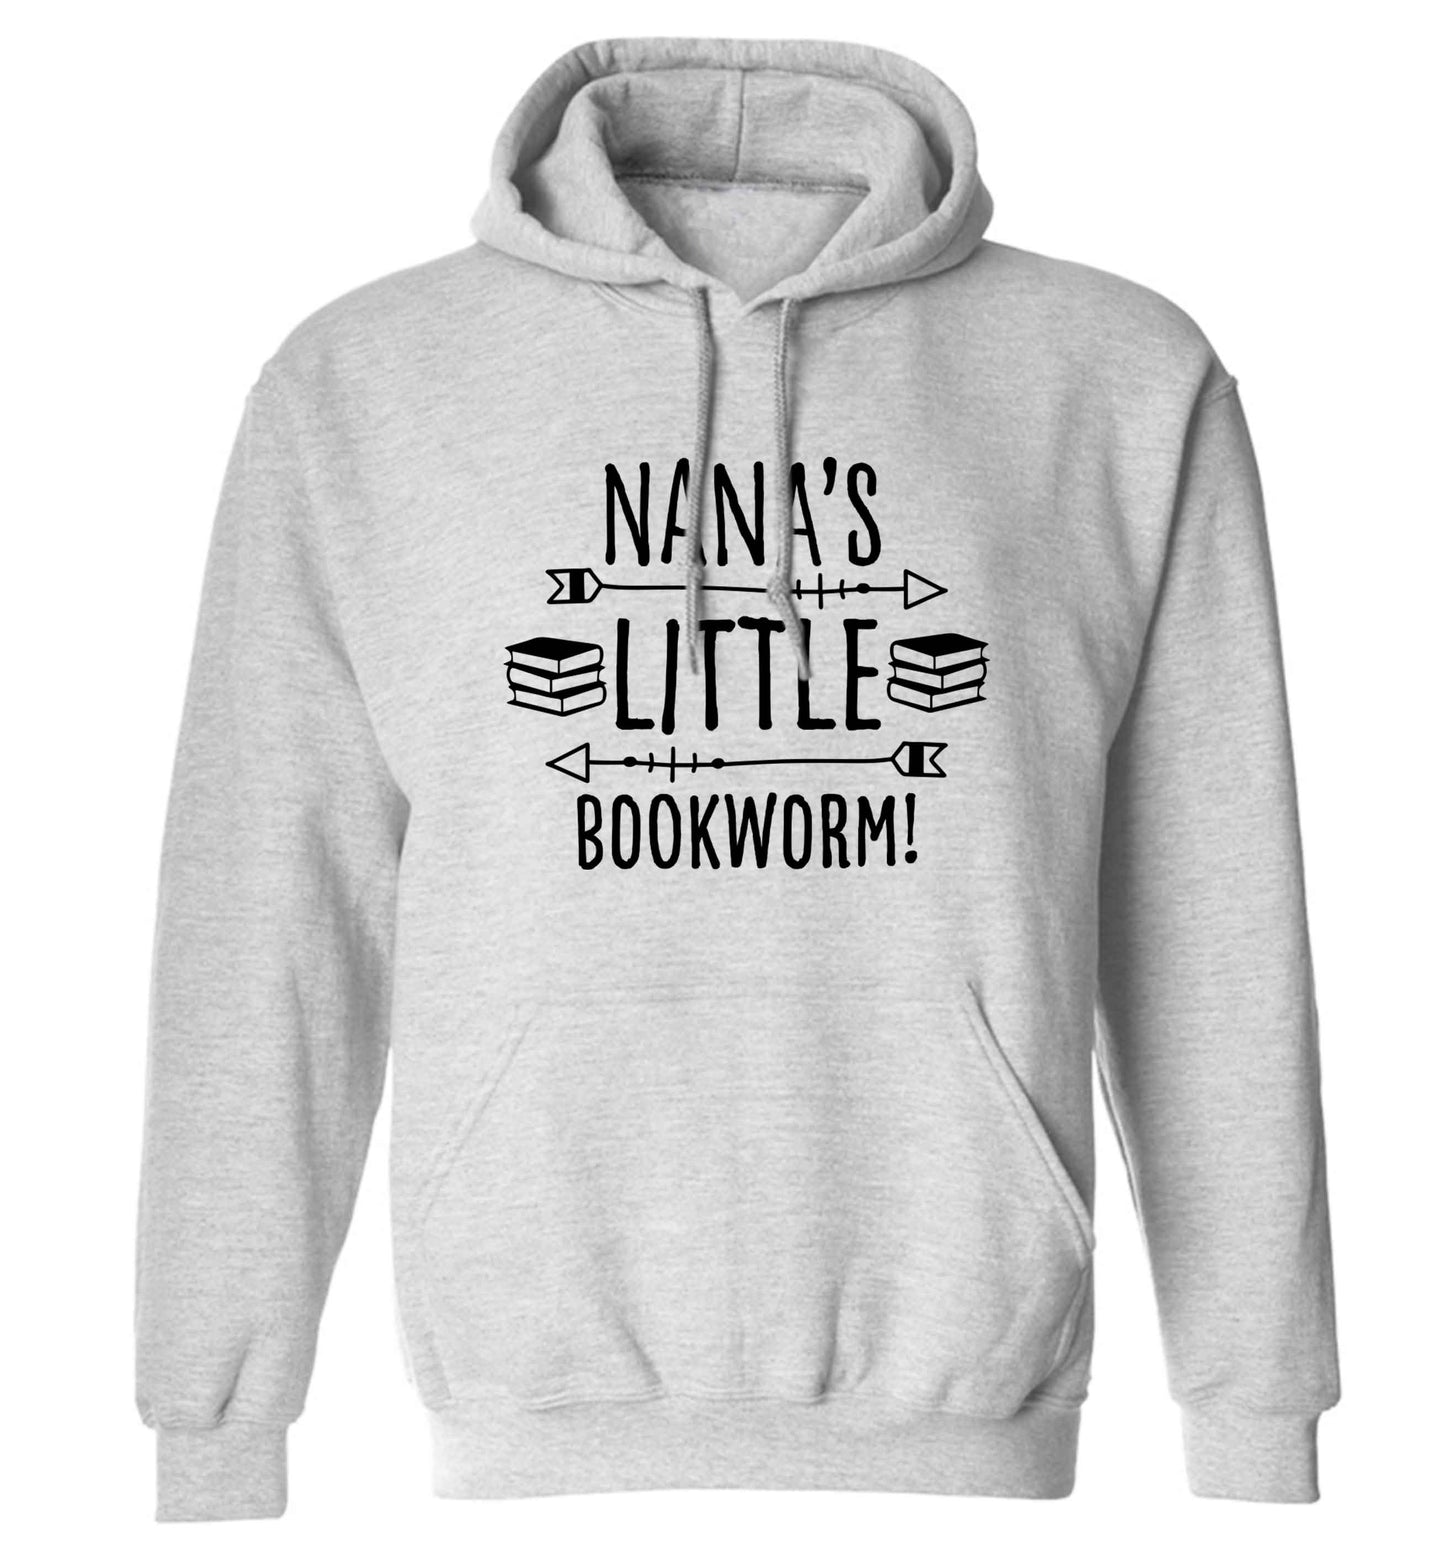 Nana's little bookworm adults unisex grey hoodie 2XL